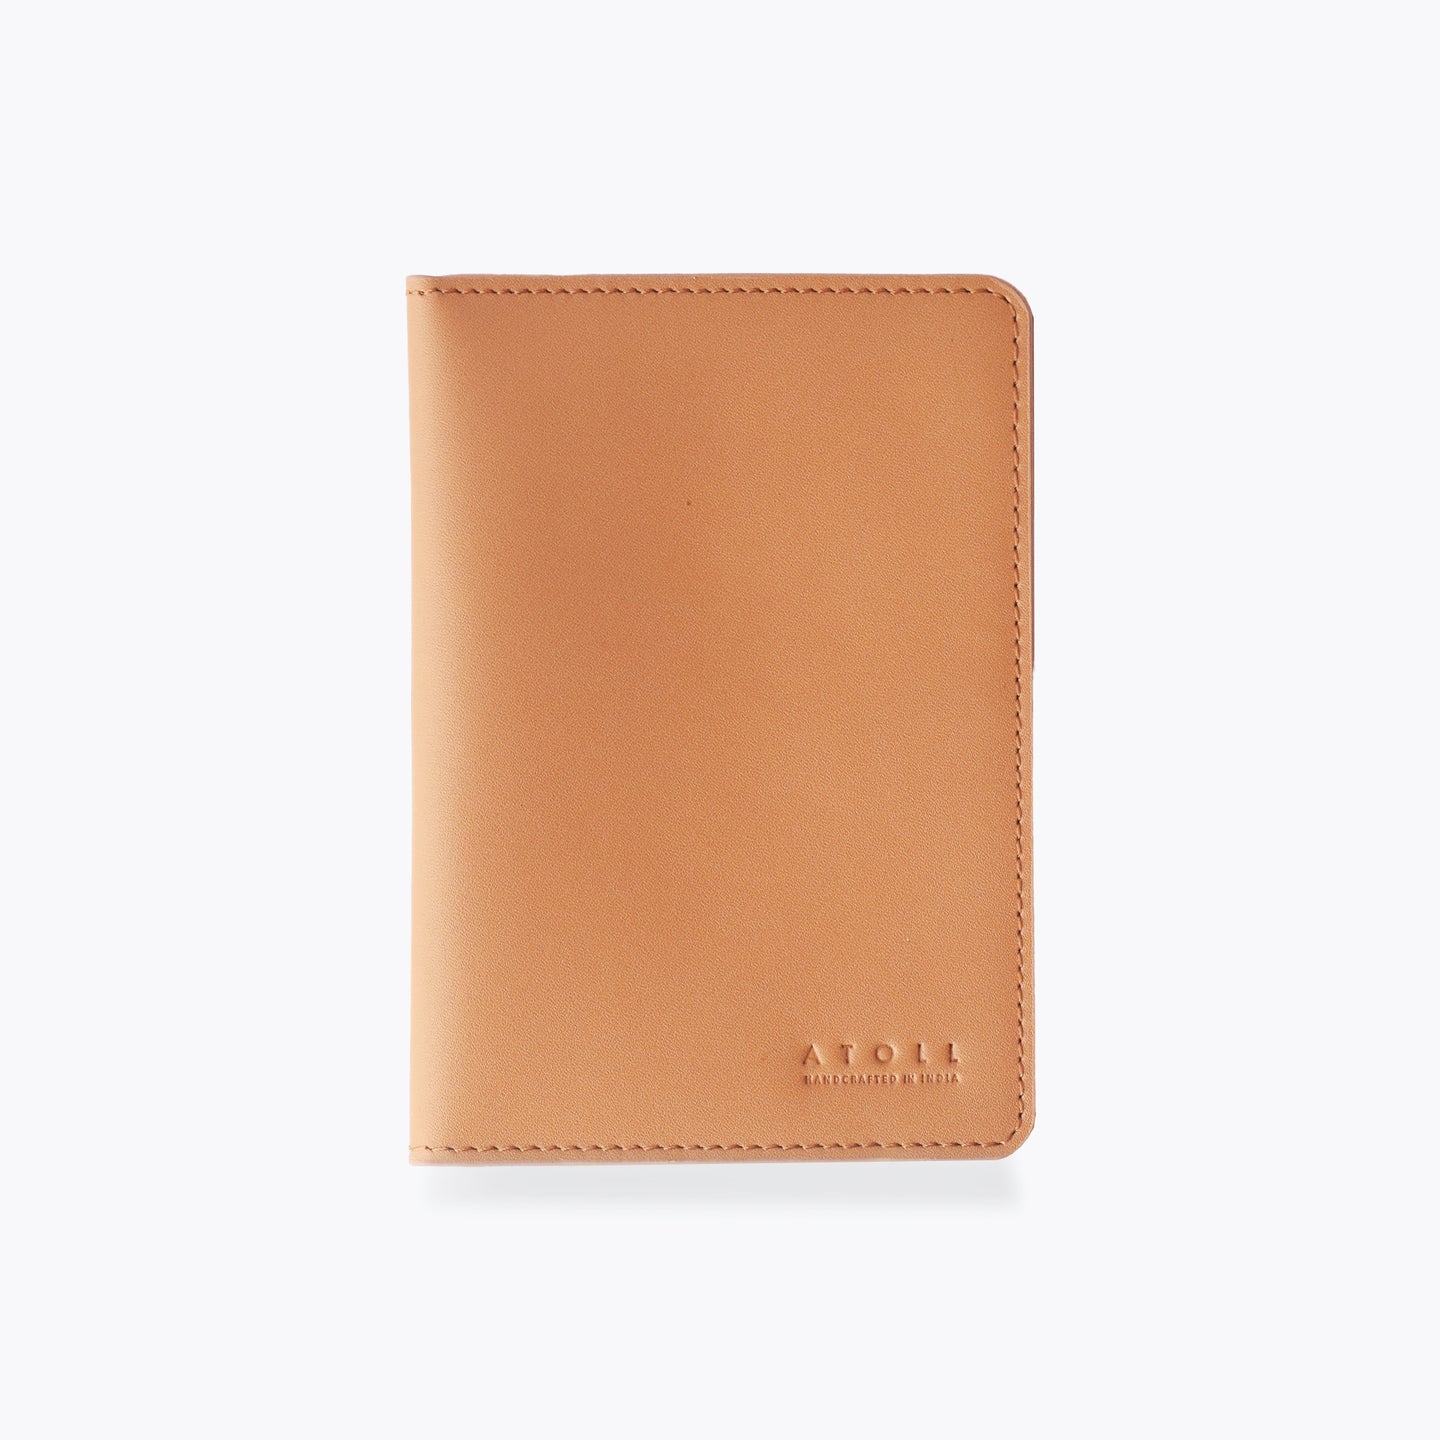 Utah - Tan Leather Passport Sleeve with Sim card Slot